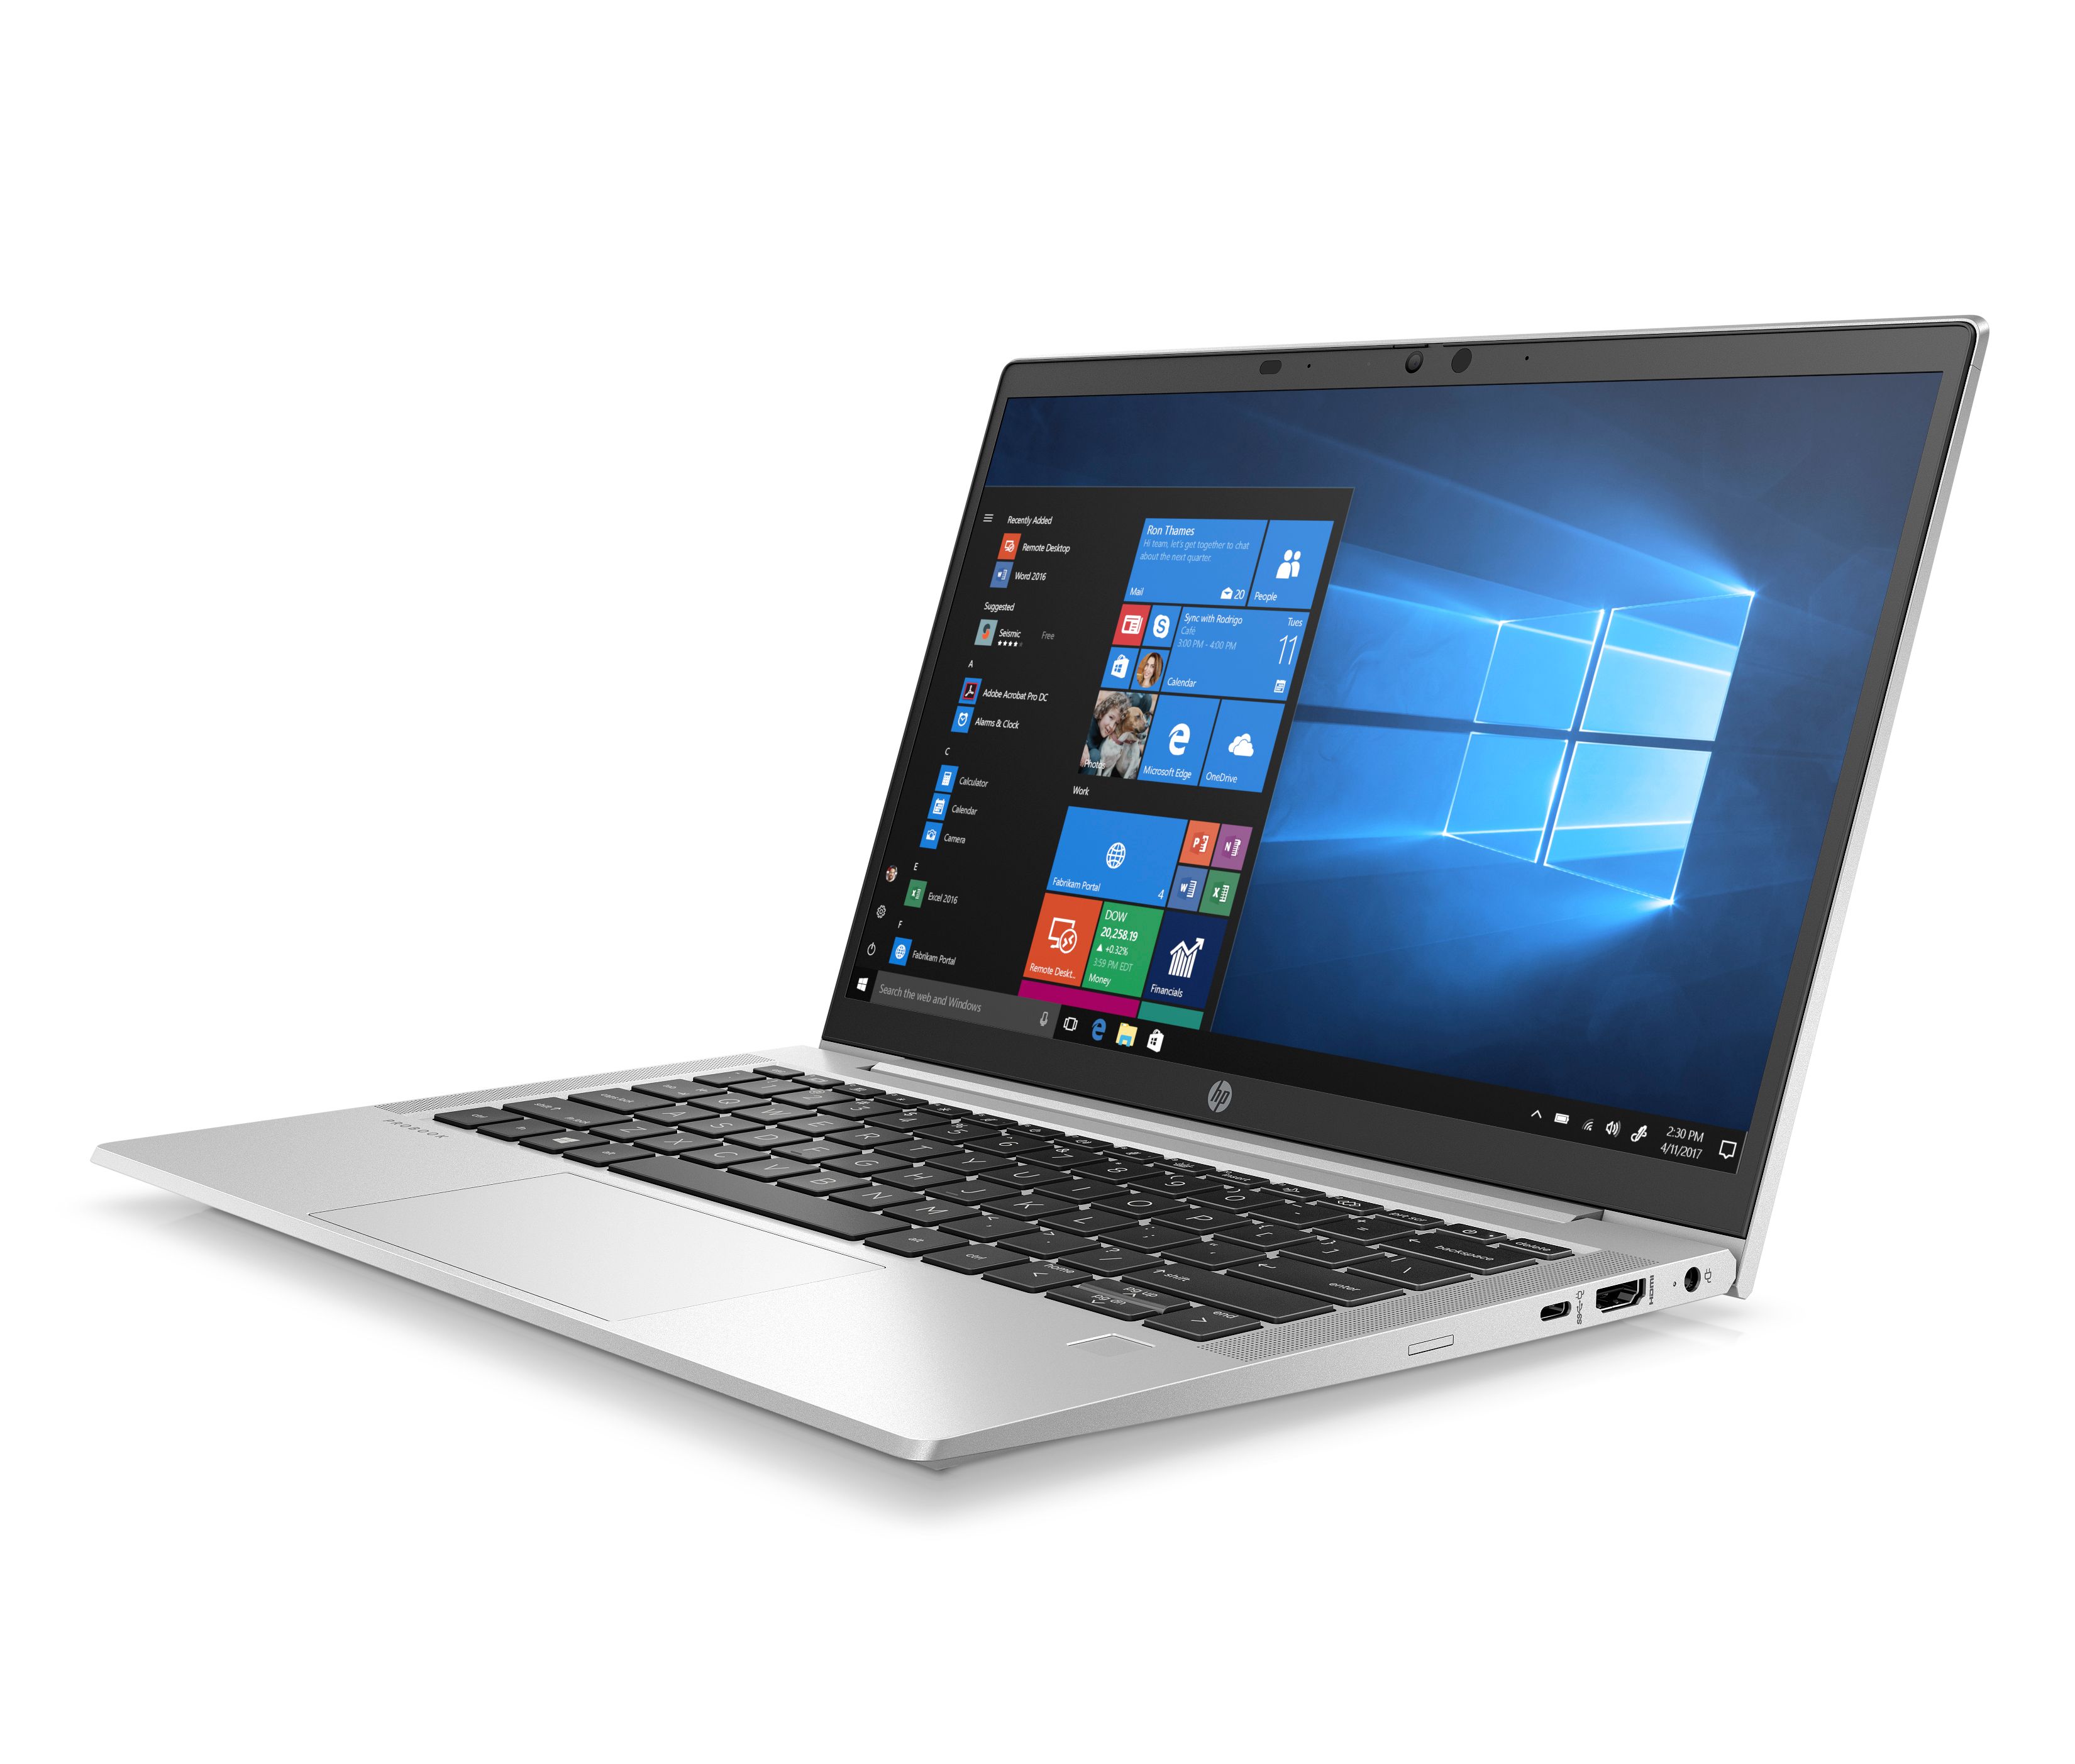 HP announces HP ProBook 635 Aero G7, the world's lightest AMD-based